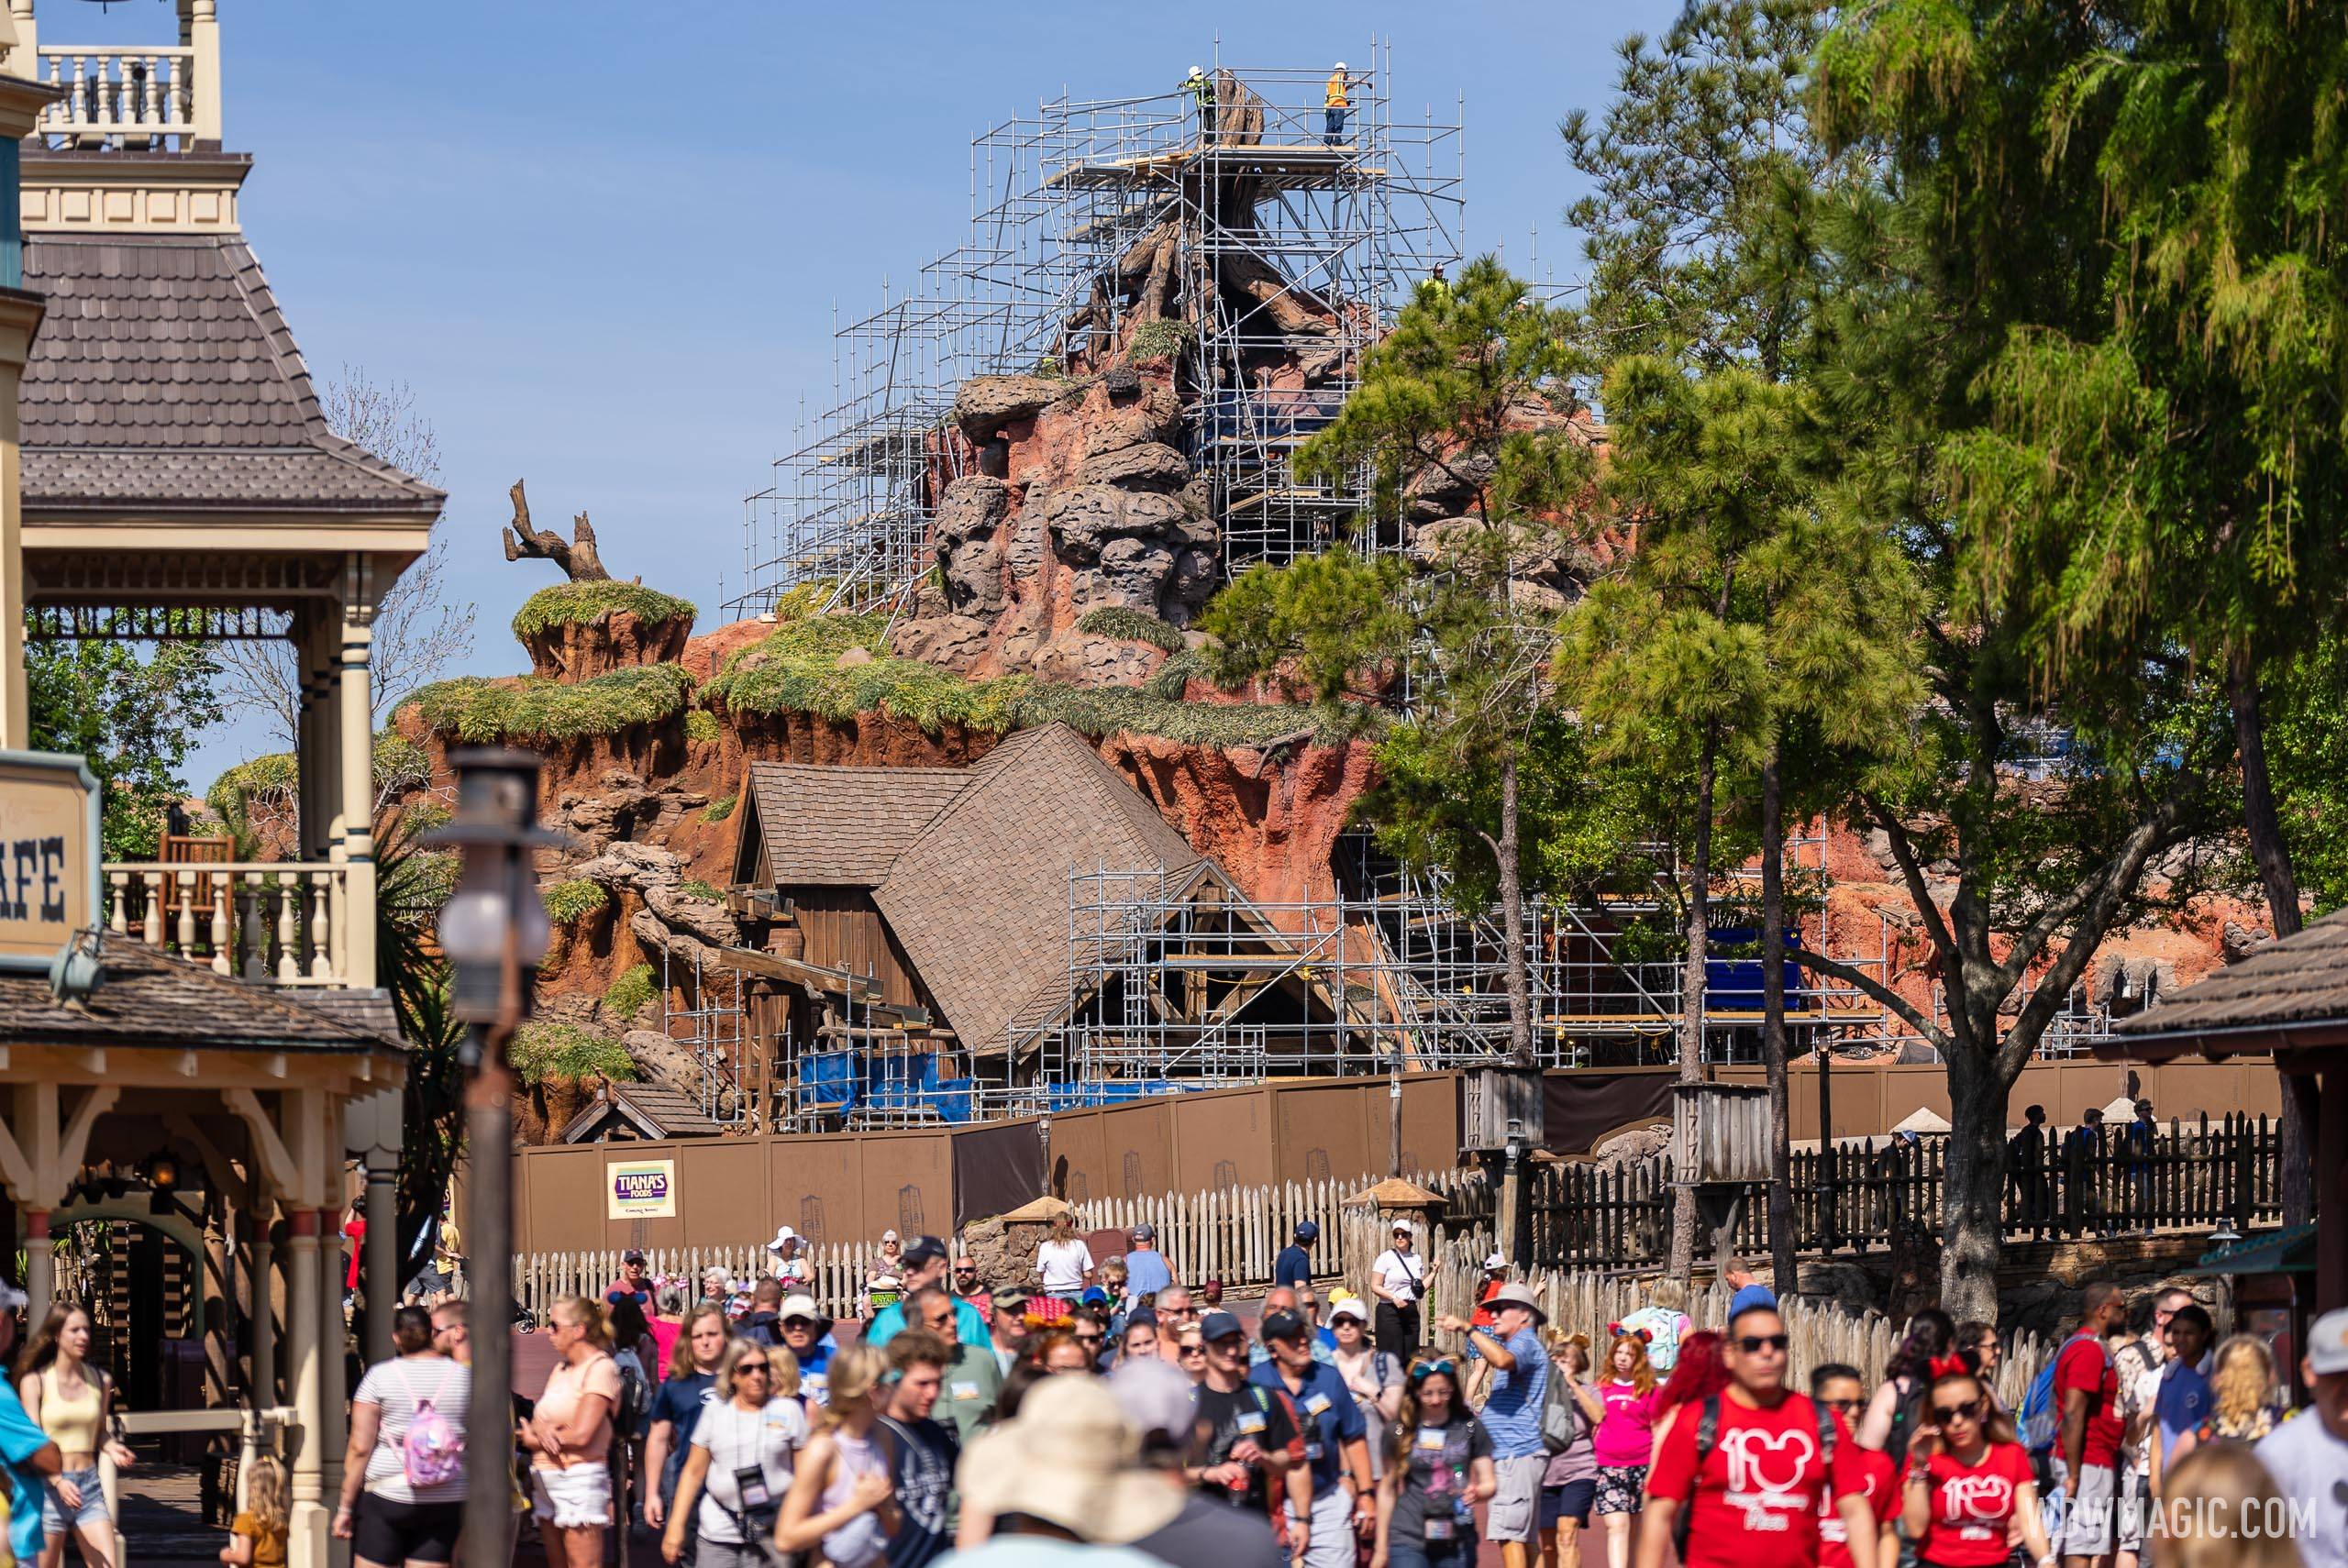 Tiana's Bayou Adventure construction update from Walt Disney World's Magic Kingdom